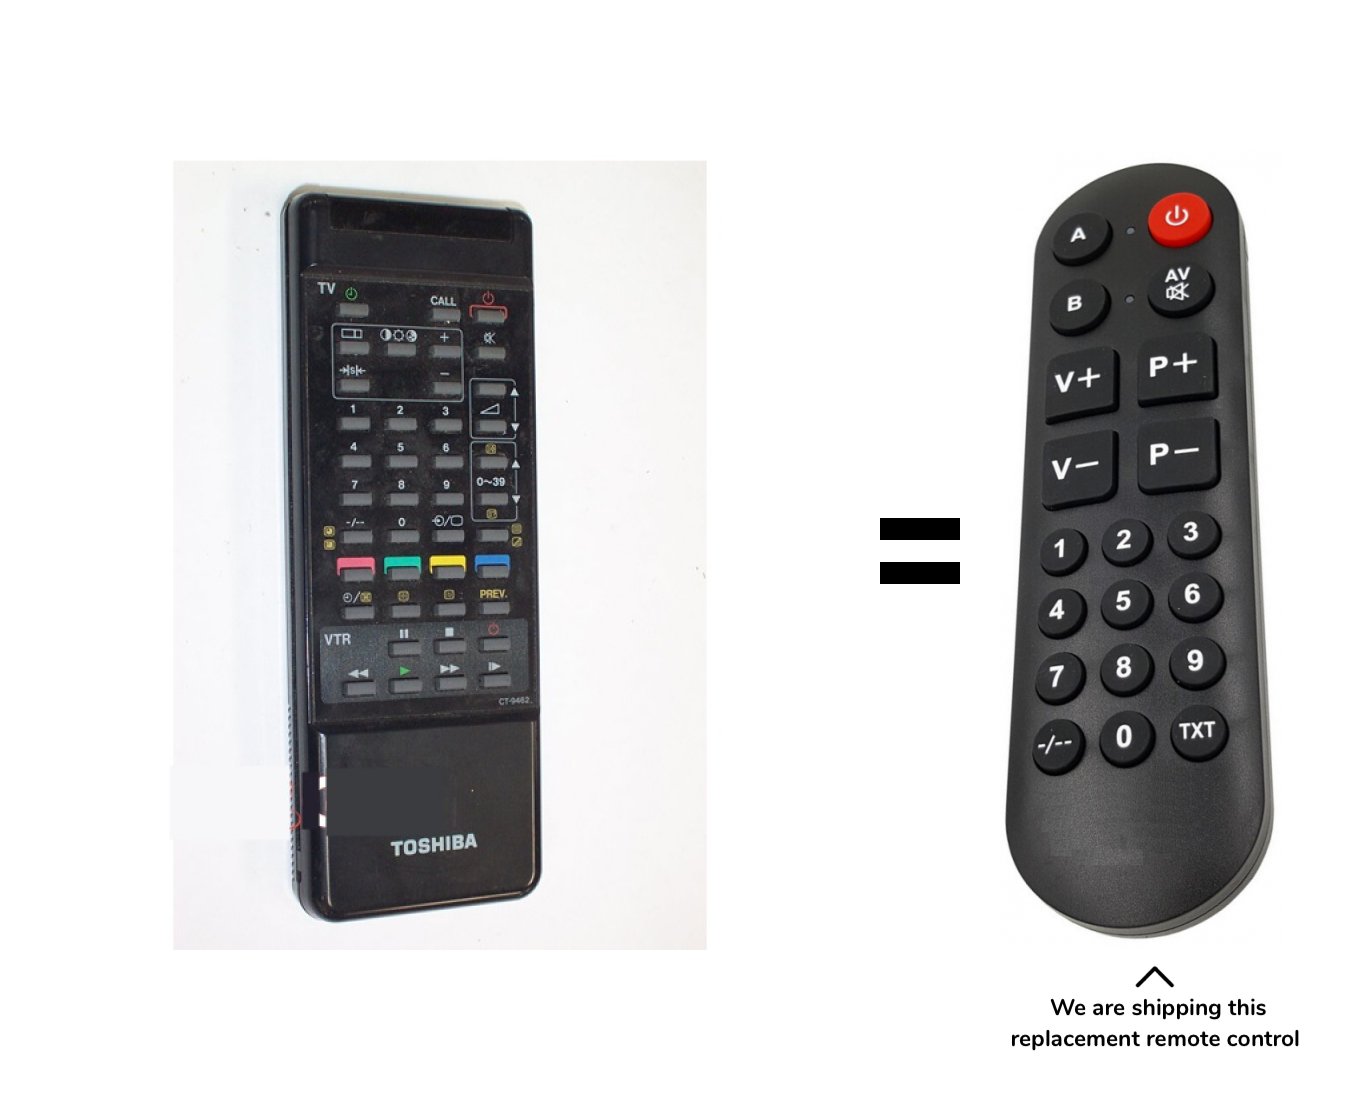 Toshiba CT-9480 remote control for seniors